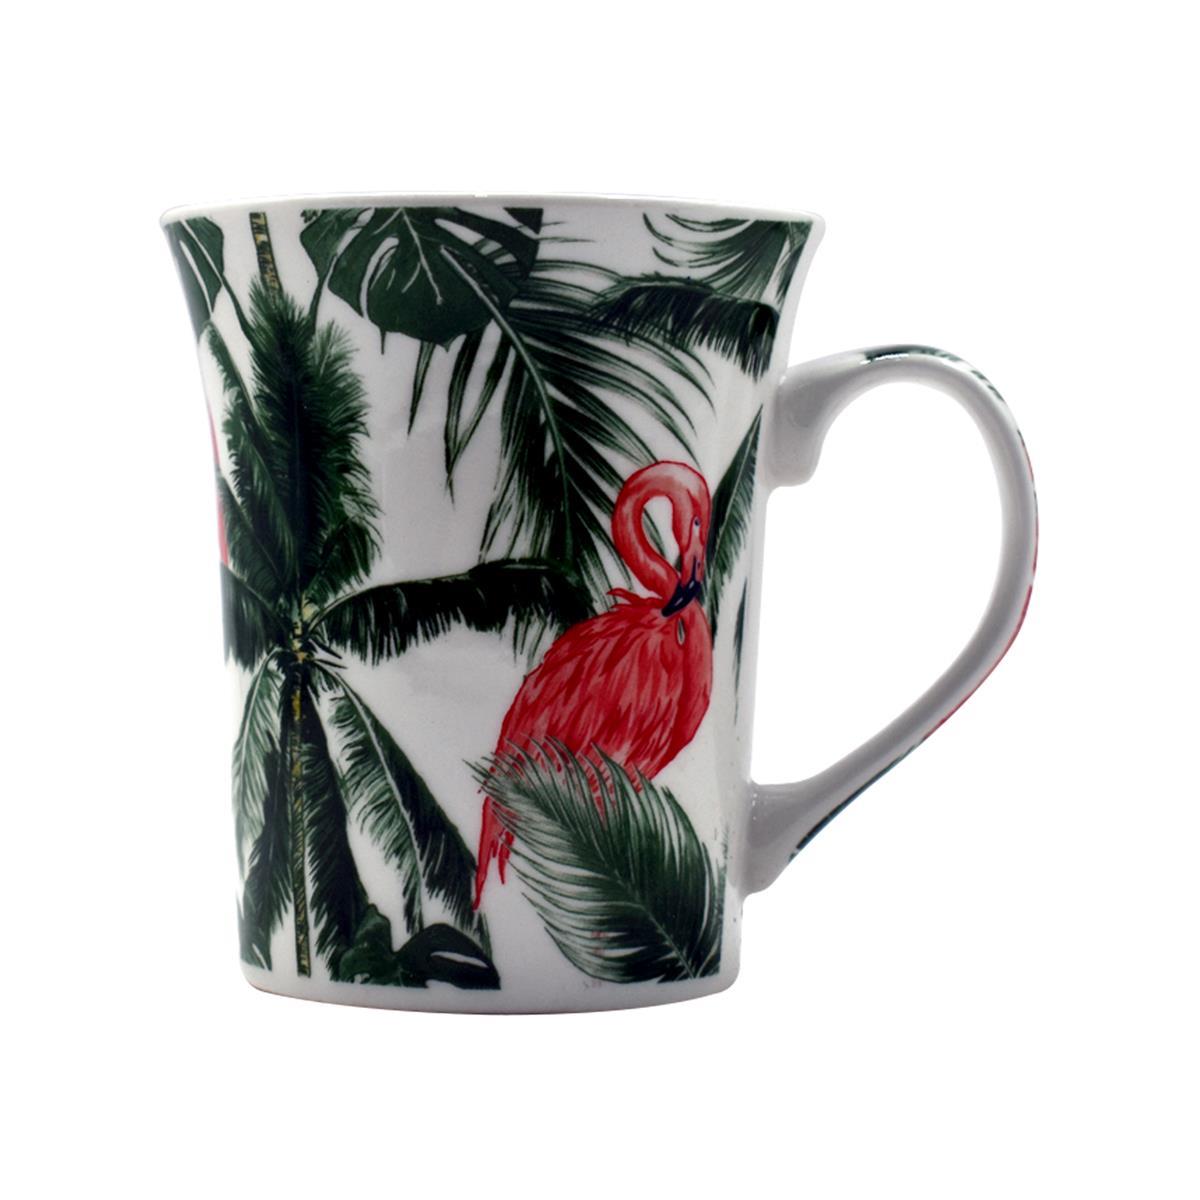 Printed Ceramic Tall Coffee or Tea Mug with handle - 325ml (BPM4051-A)